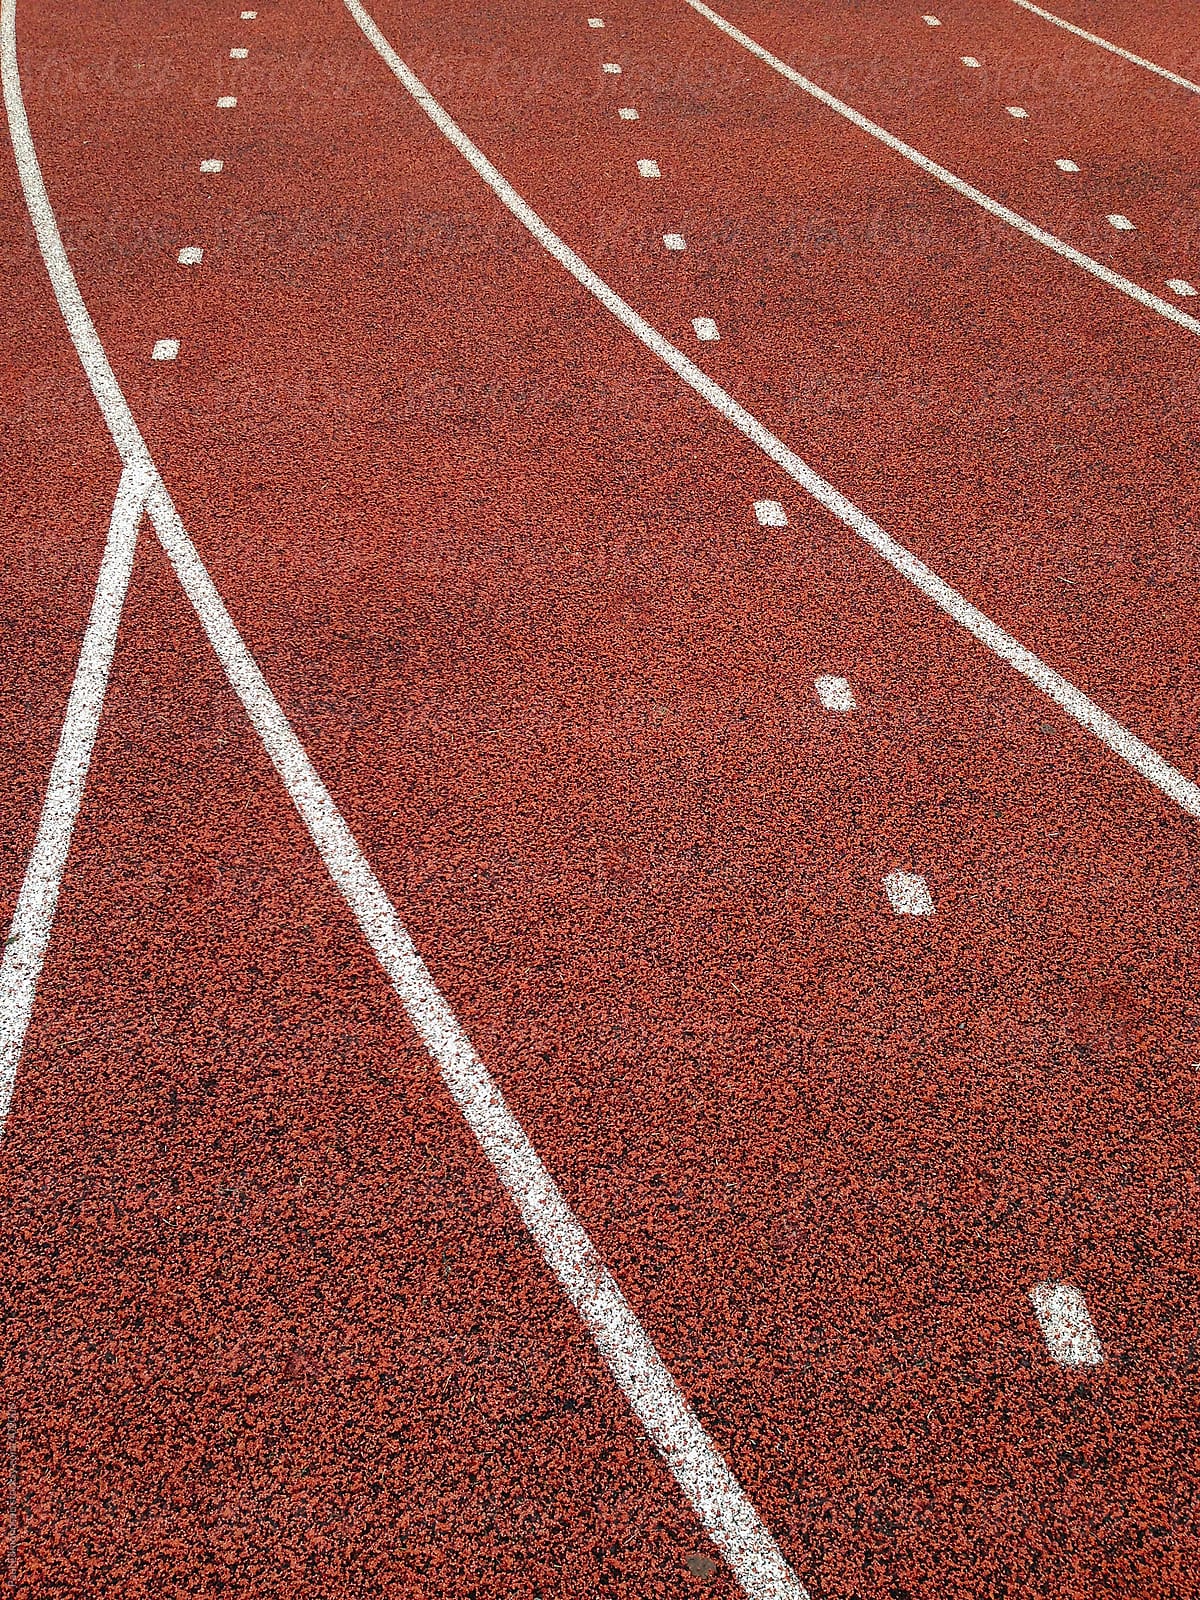 Detail of running track